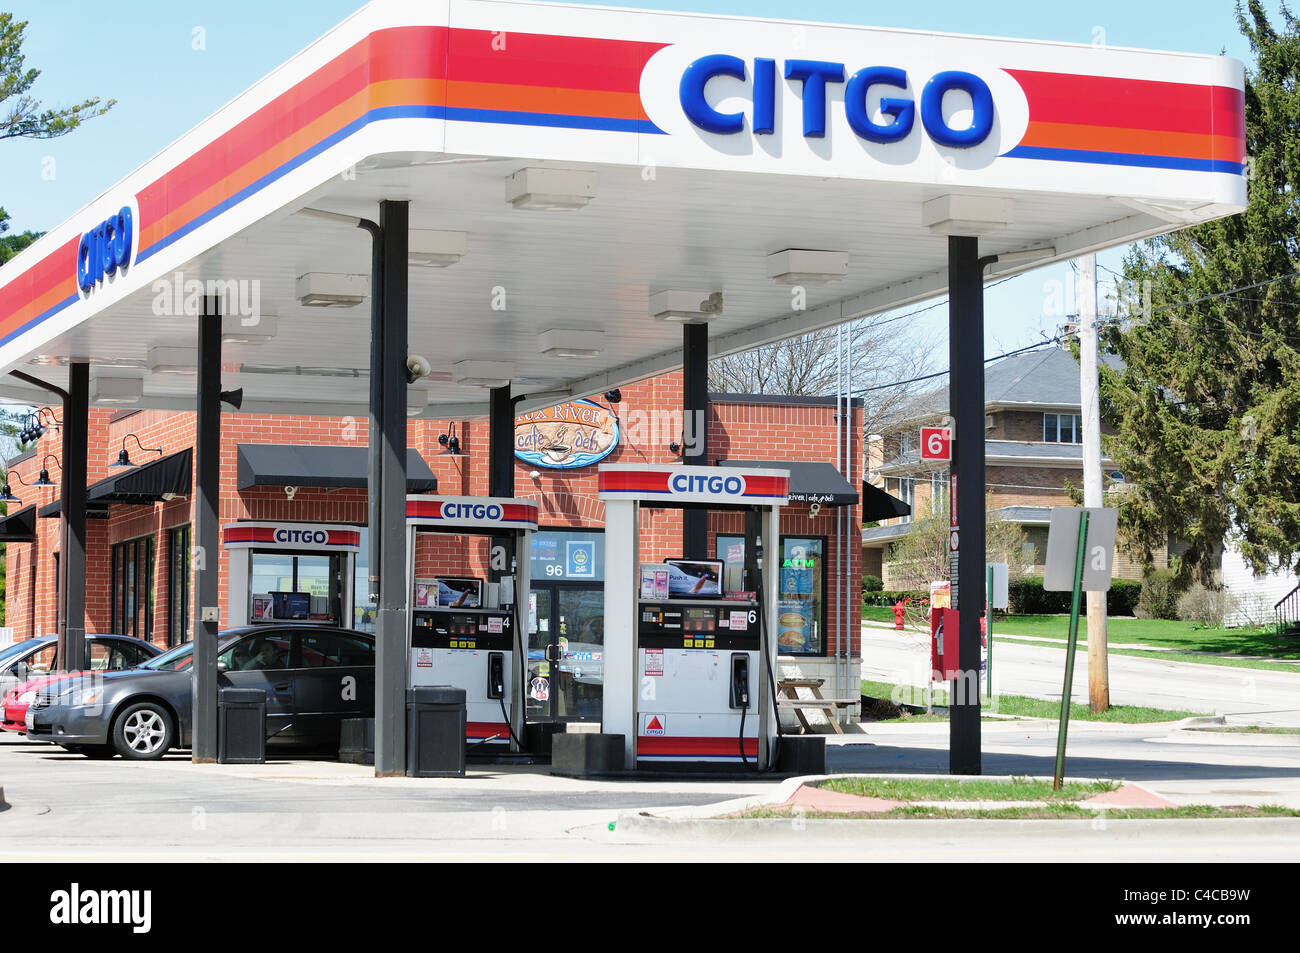 citgo-gas-station-neatly-tucked-into-a-small-community-neighborhood